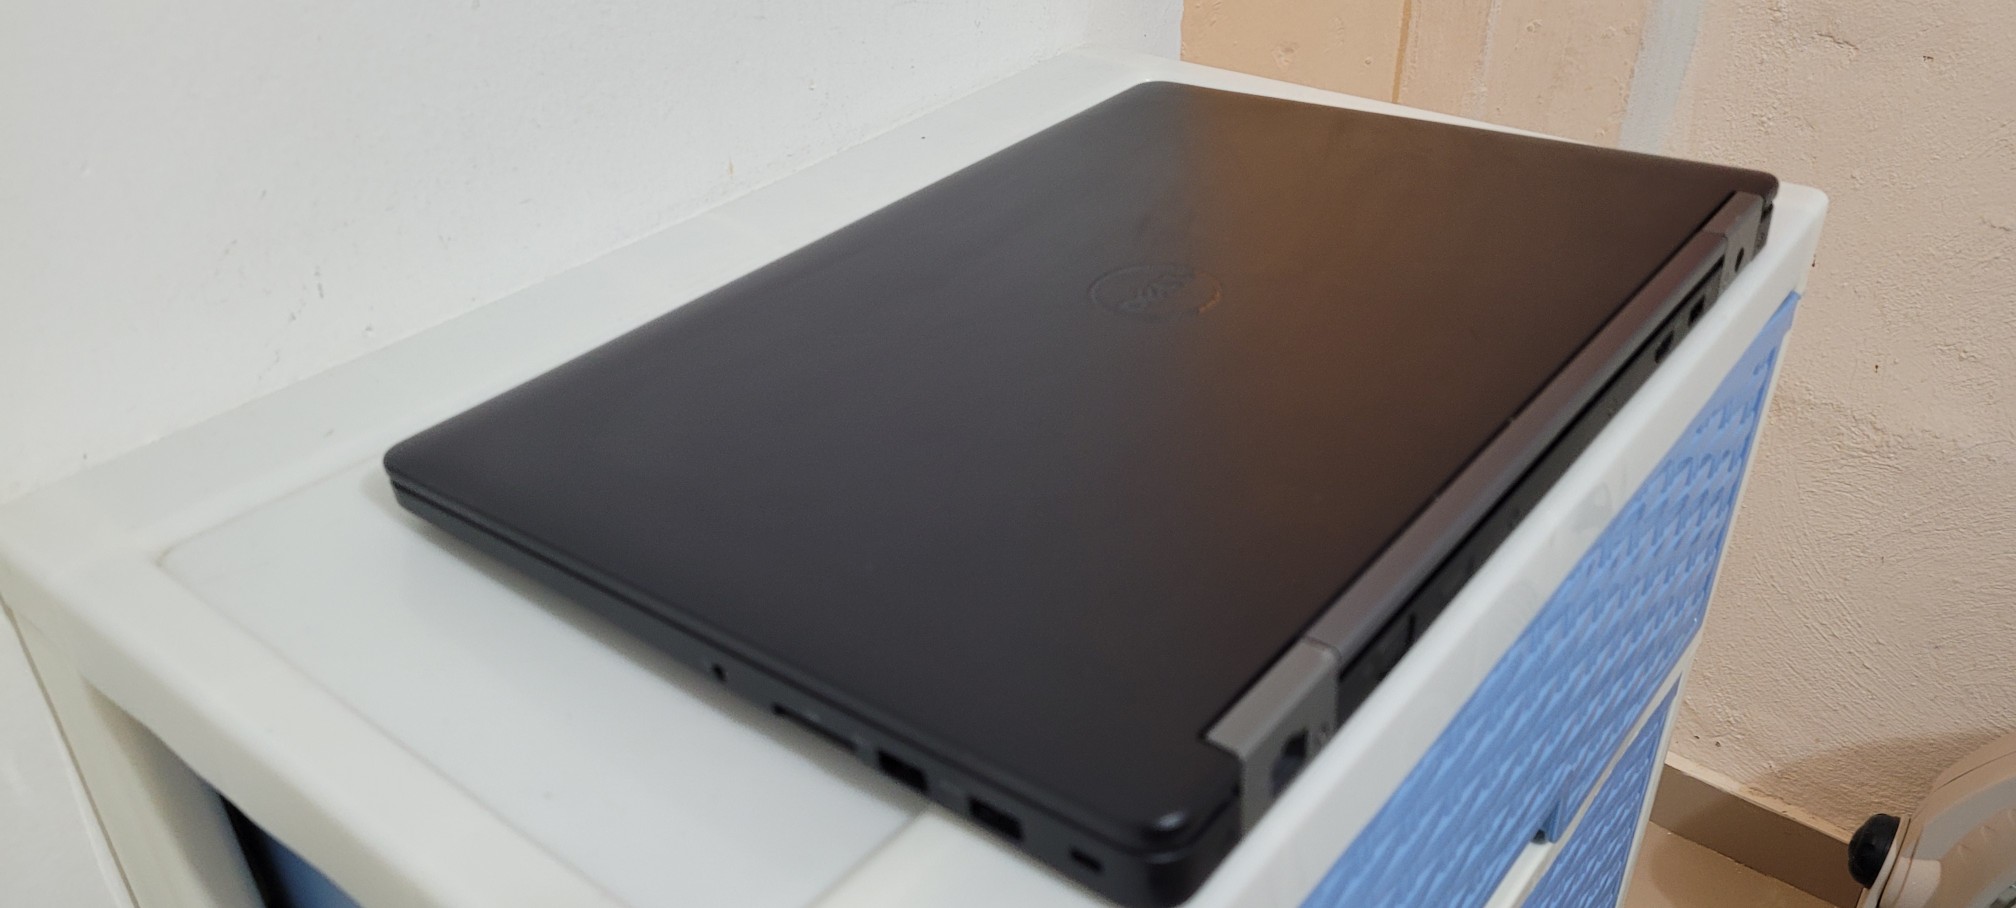 computadoras y laptops - Laptop Dell Slim 14 Pulg Core i7 6ta Ram 8gb ddr4 Disco 256gb SSD Full 1080p 2